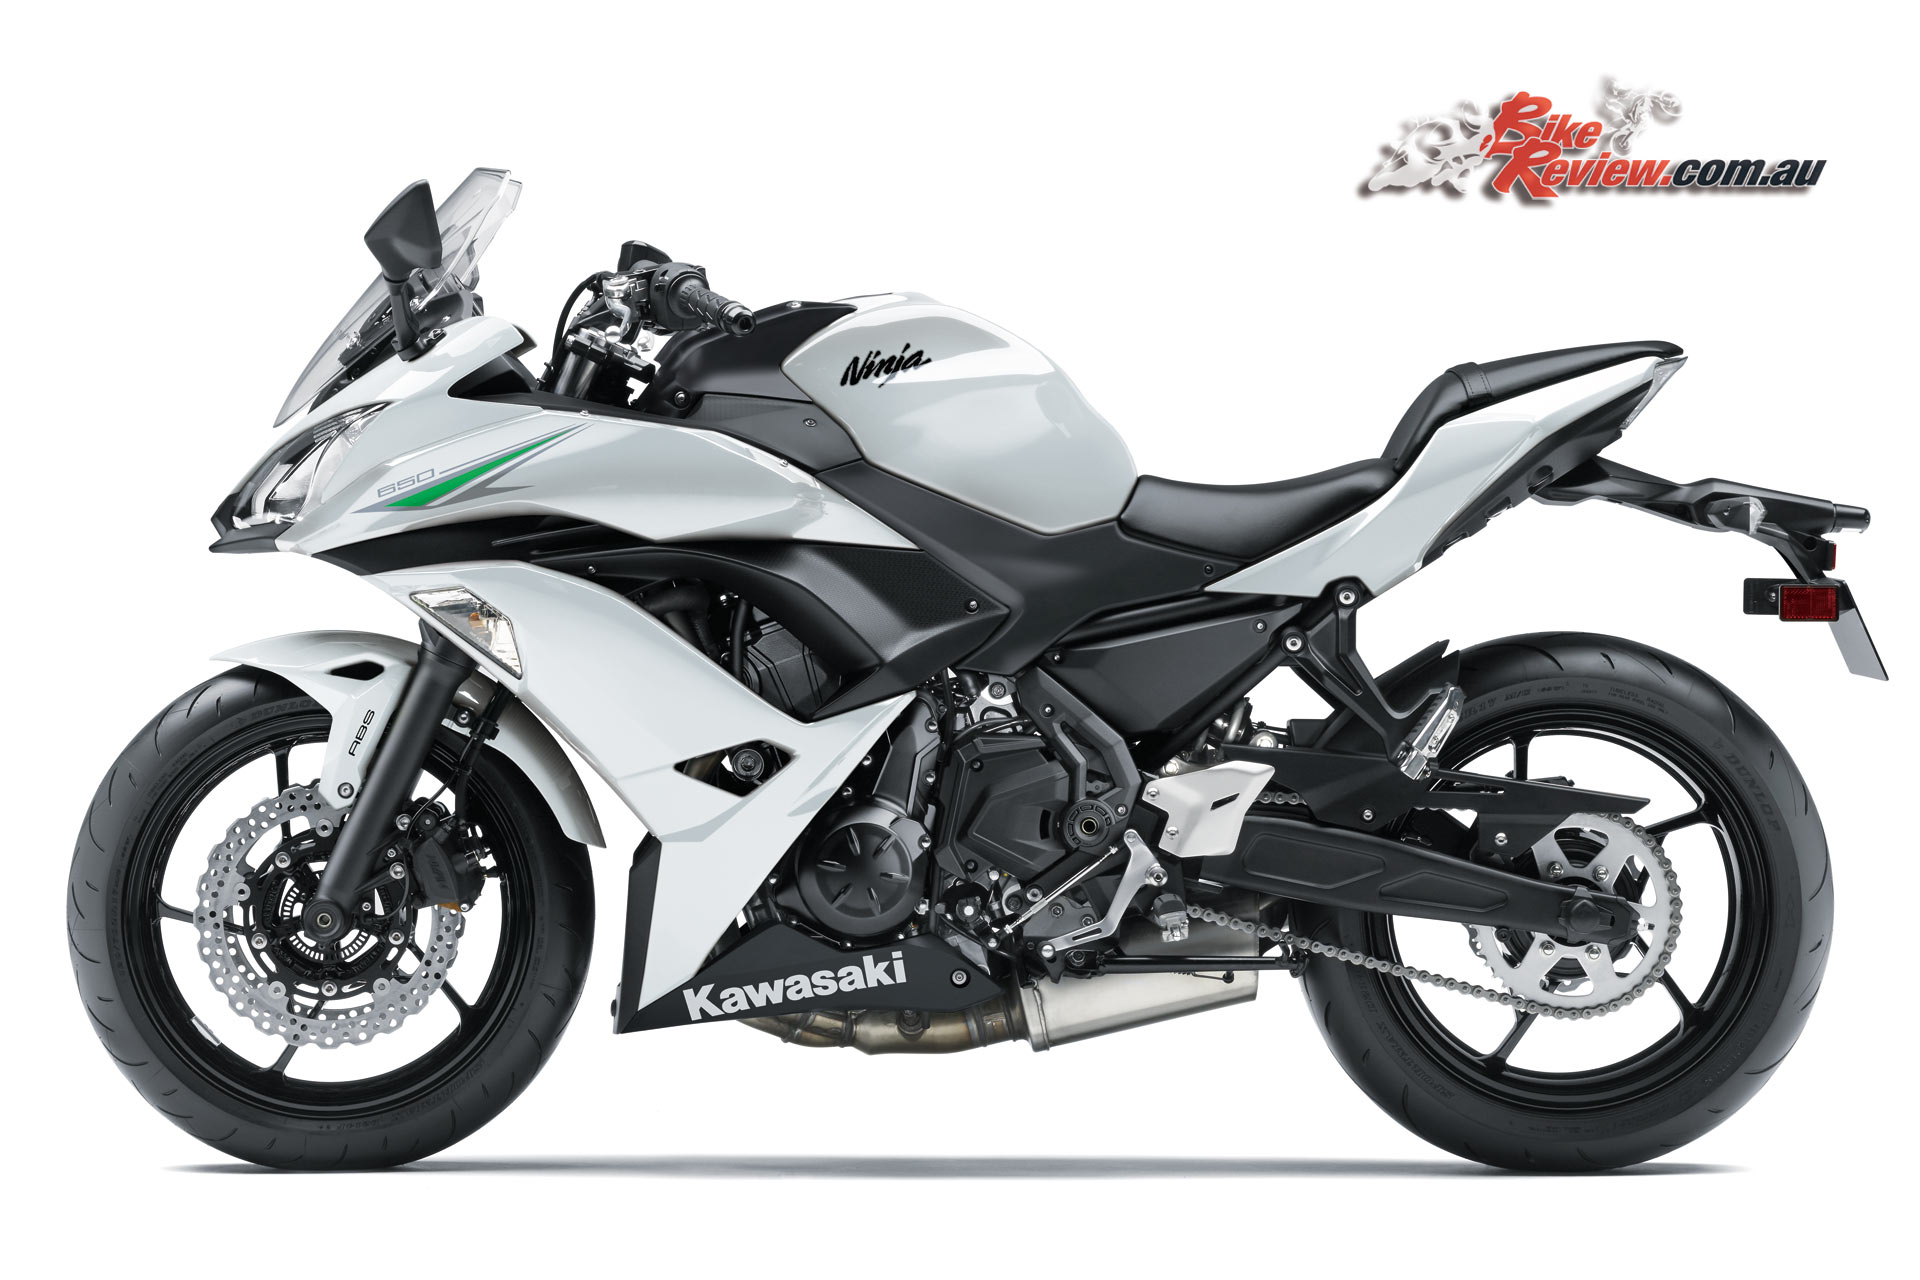 dyd Kondensere gået i stykker 2017 Kawasaki Ninja 650 & 650L - Bike Review